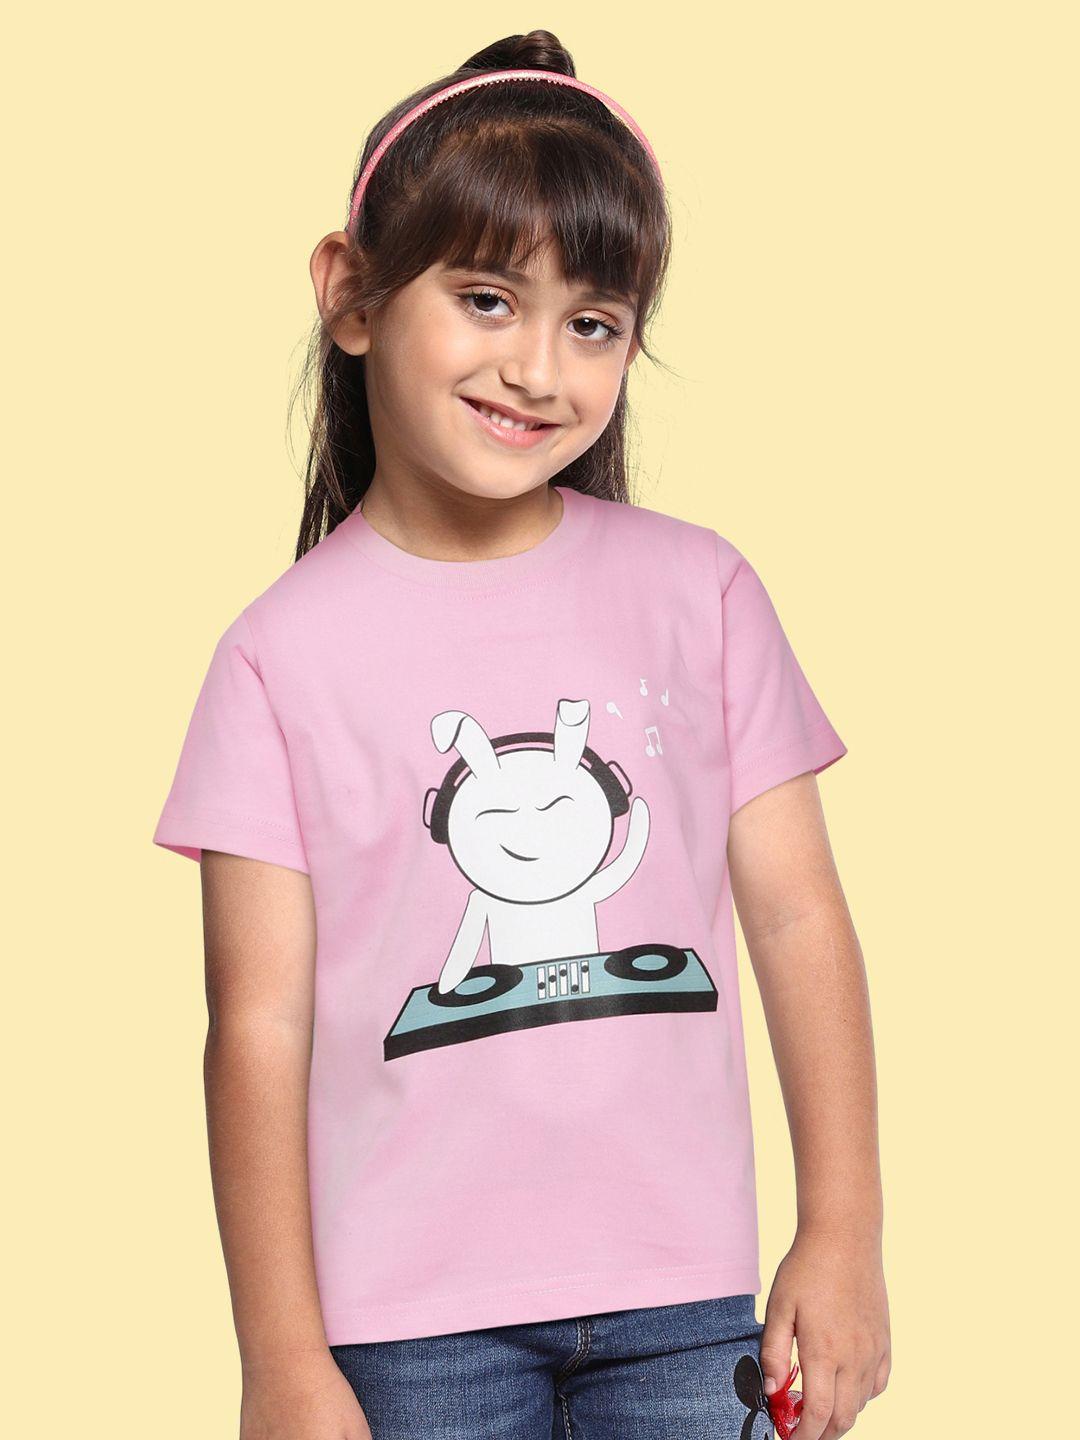 bratma kids pink & white printed cotton t-shirt